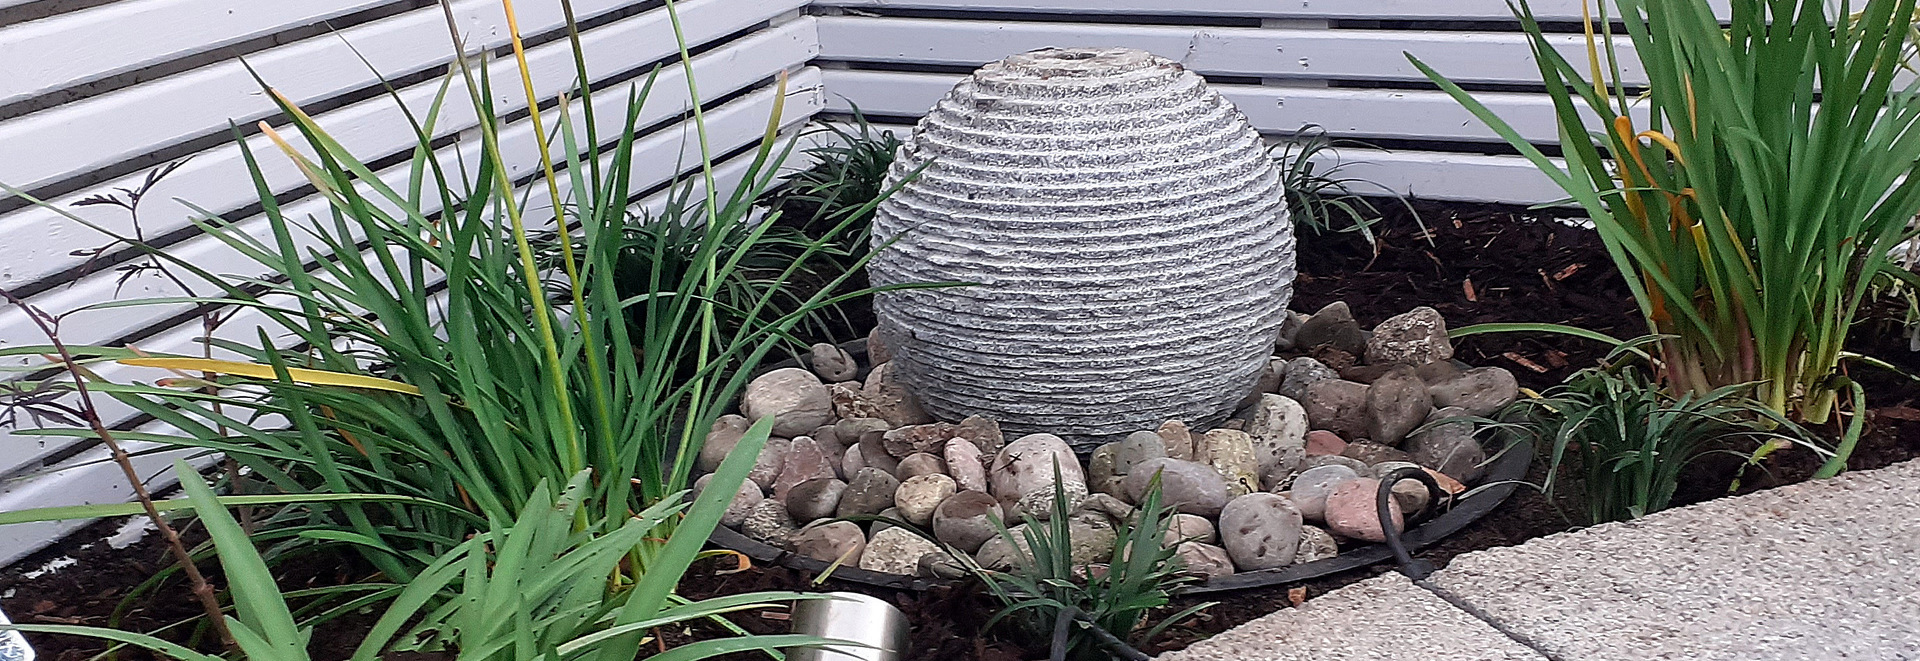 Granite Sphere Water Features - on sale now at GardenStudio, Tel 087-2306 128.